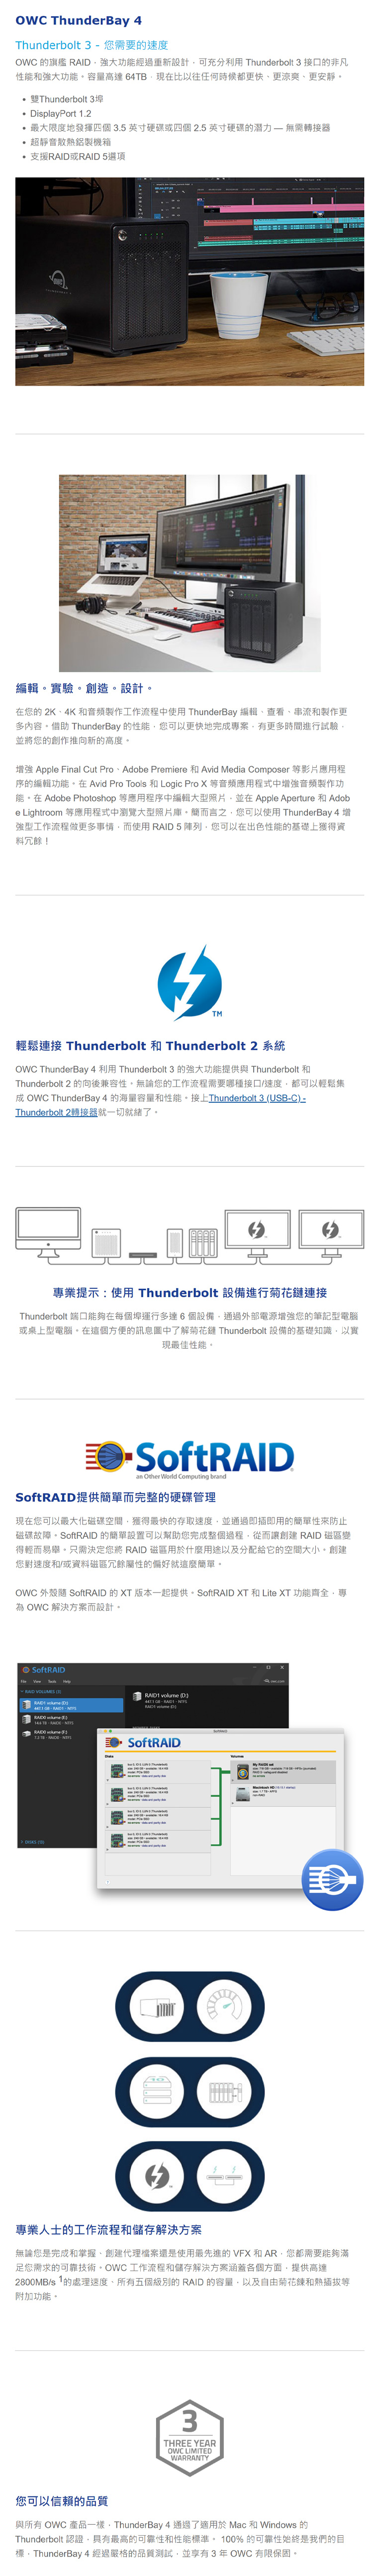 OWC-ThunderBay-4-內.jpg